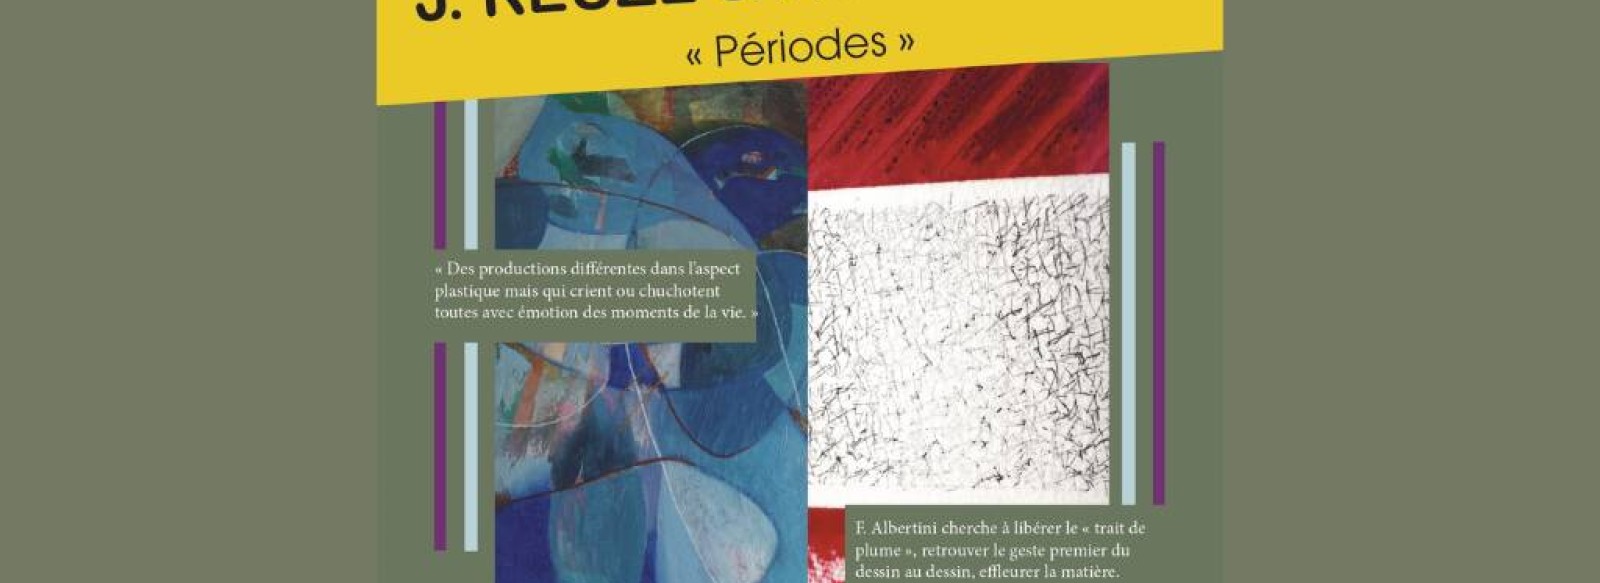 EXPOSITIONS "Periodes" de J. REUZE- peinture & "Calligraphie" de F. ALBERTINI